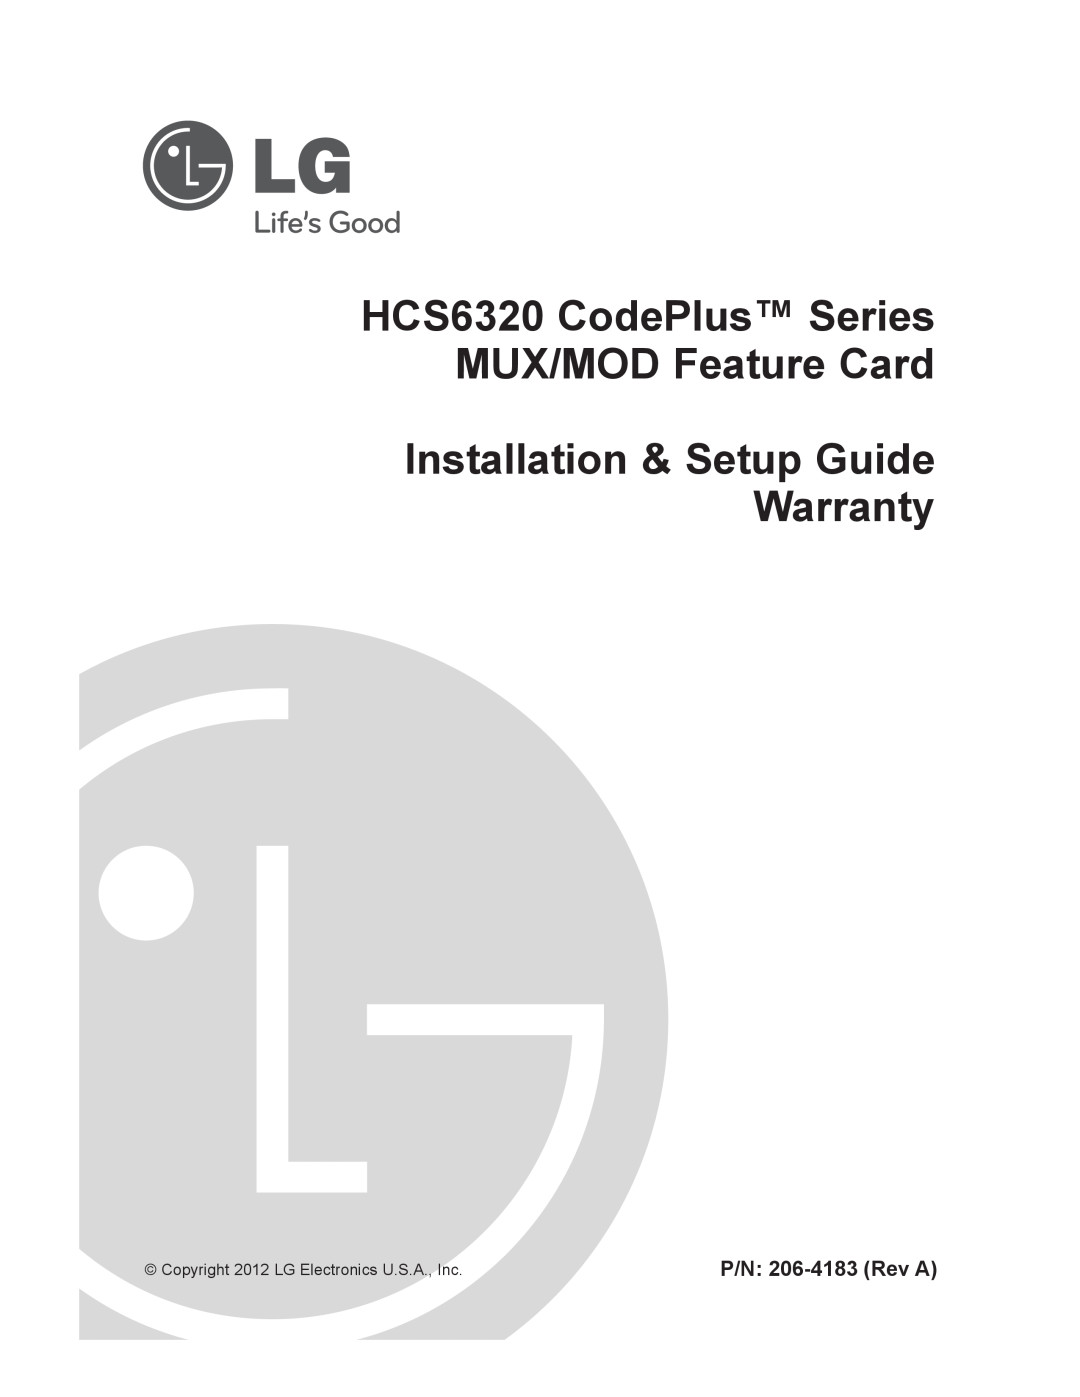 LG Electronics setup guide HCS6320 CodePlus Series MUX/MOD Feature Card, Installation & Setup Guide Warranty 